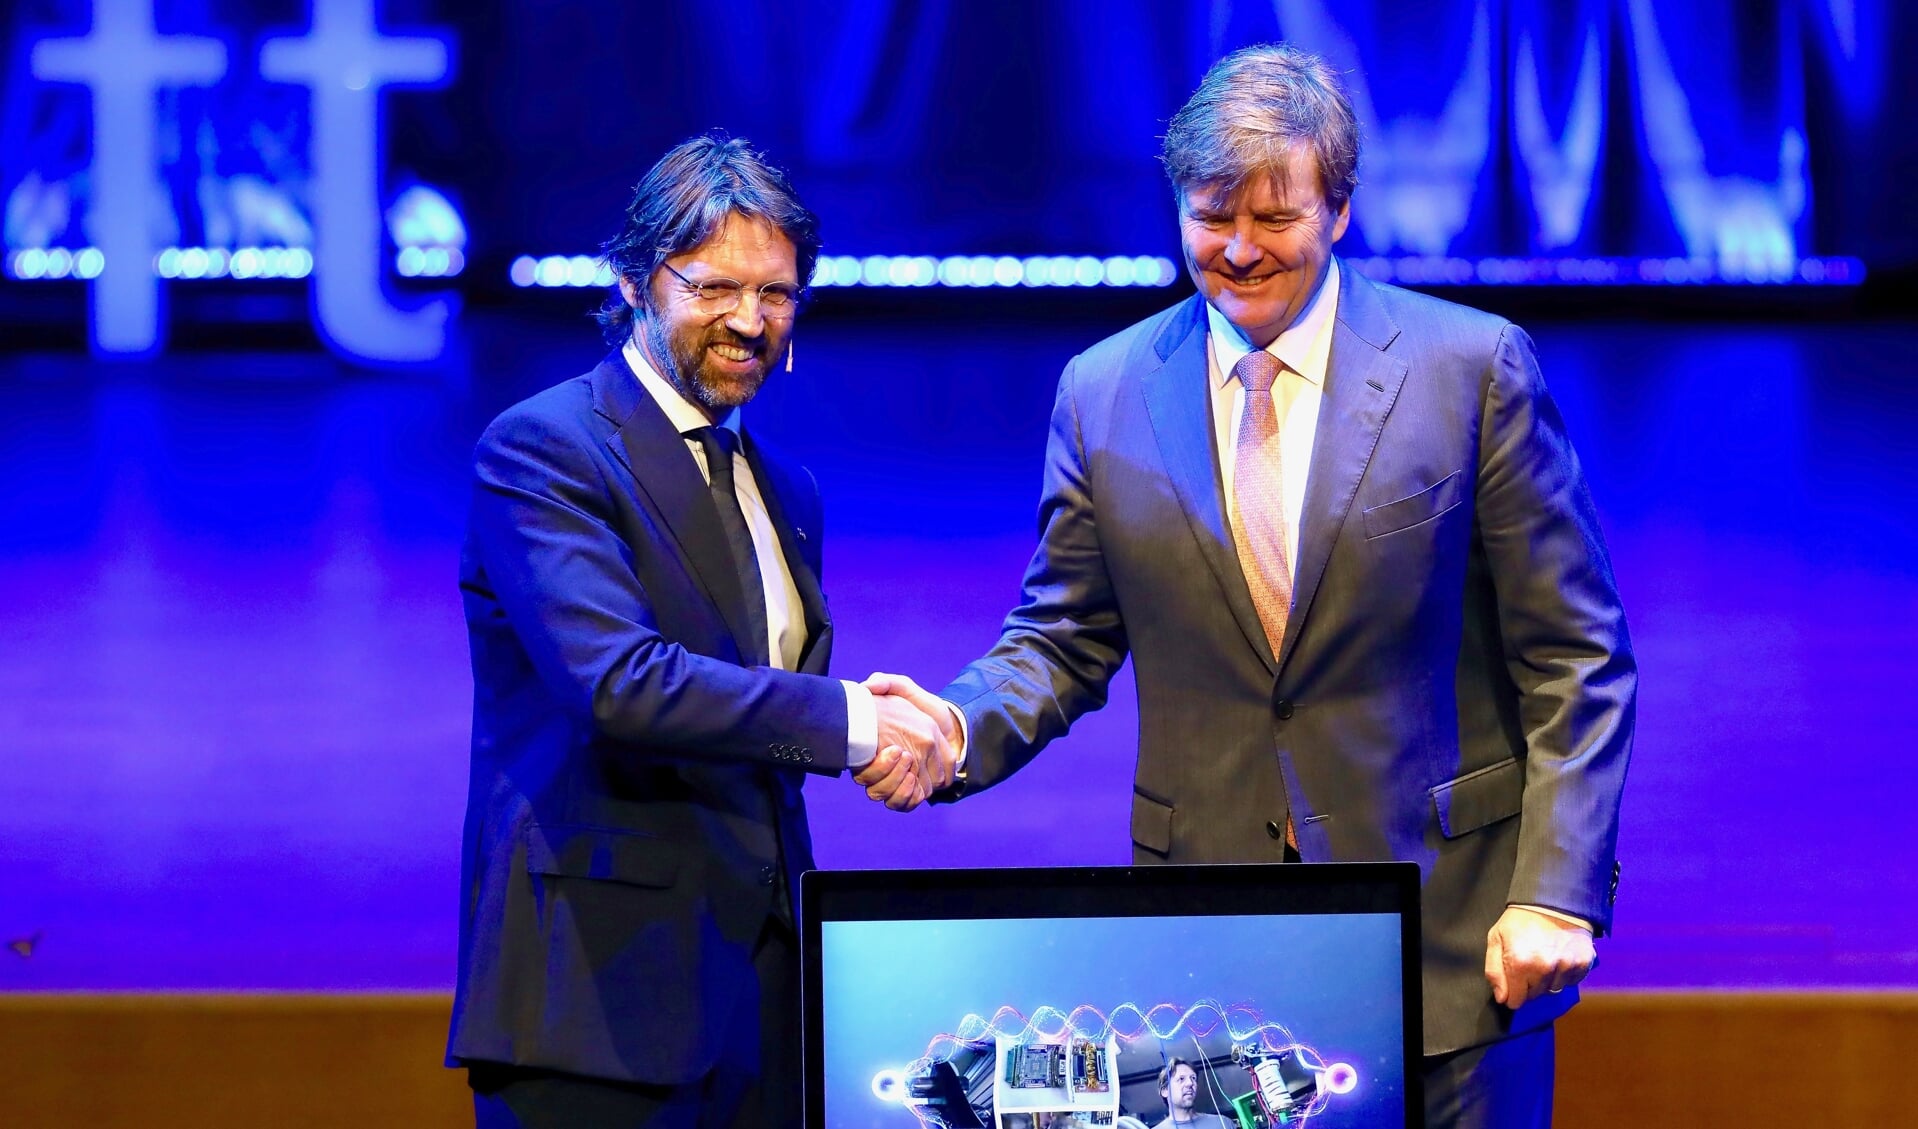 Professor Leo Kouwenhoven schudt koning Willem-Alexander de hand na de openingshandeling (Foto: Koos Bommelé)